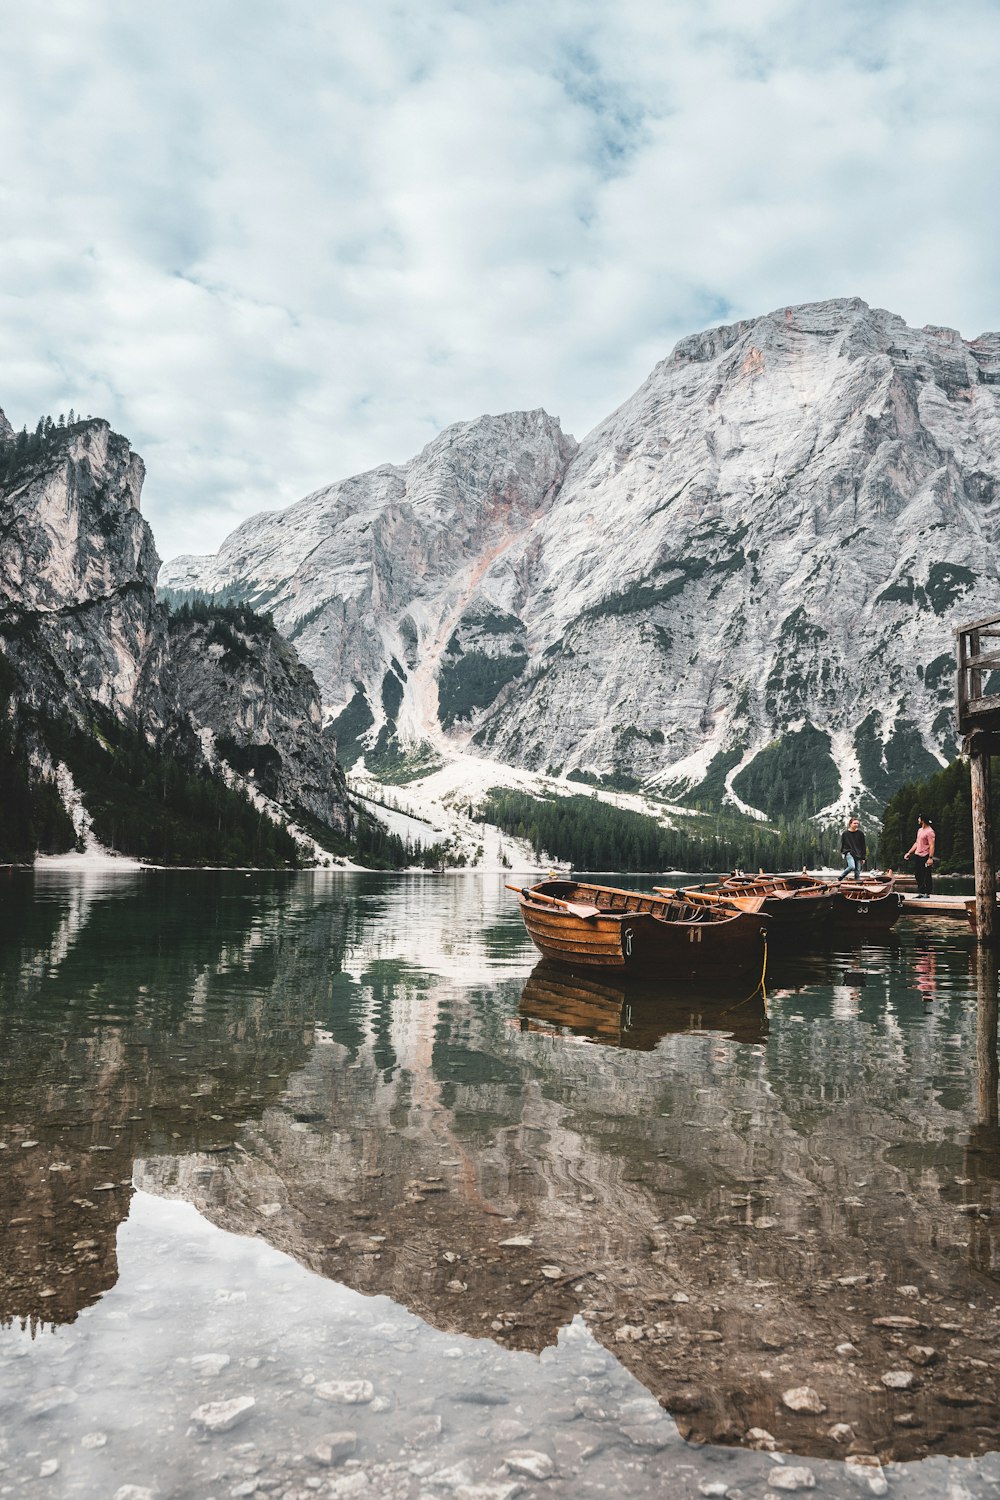 Un barco en un lago con montañas nevadas al fondo